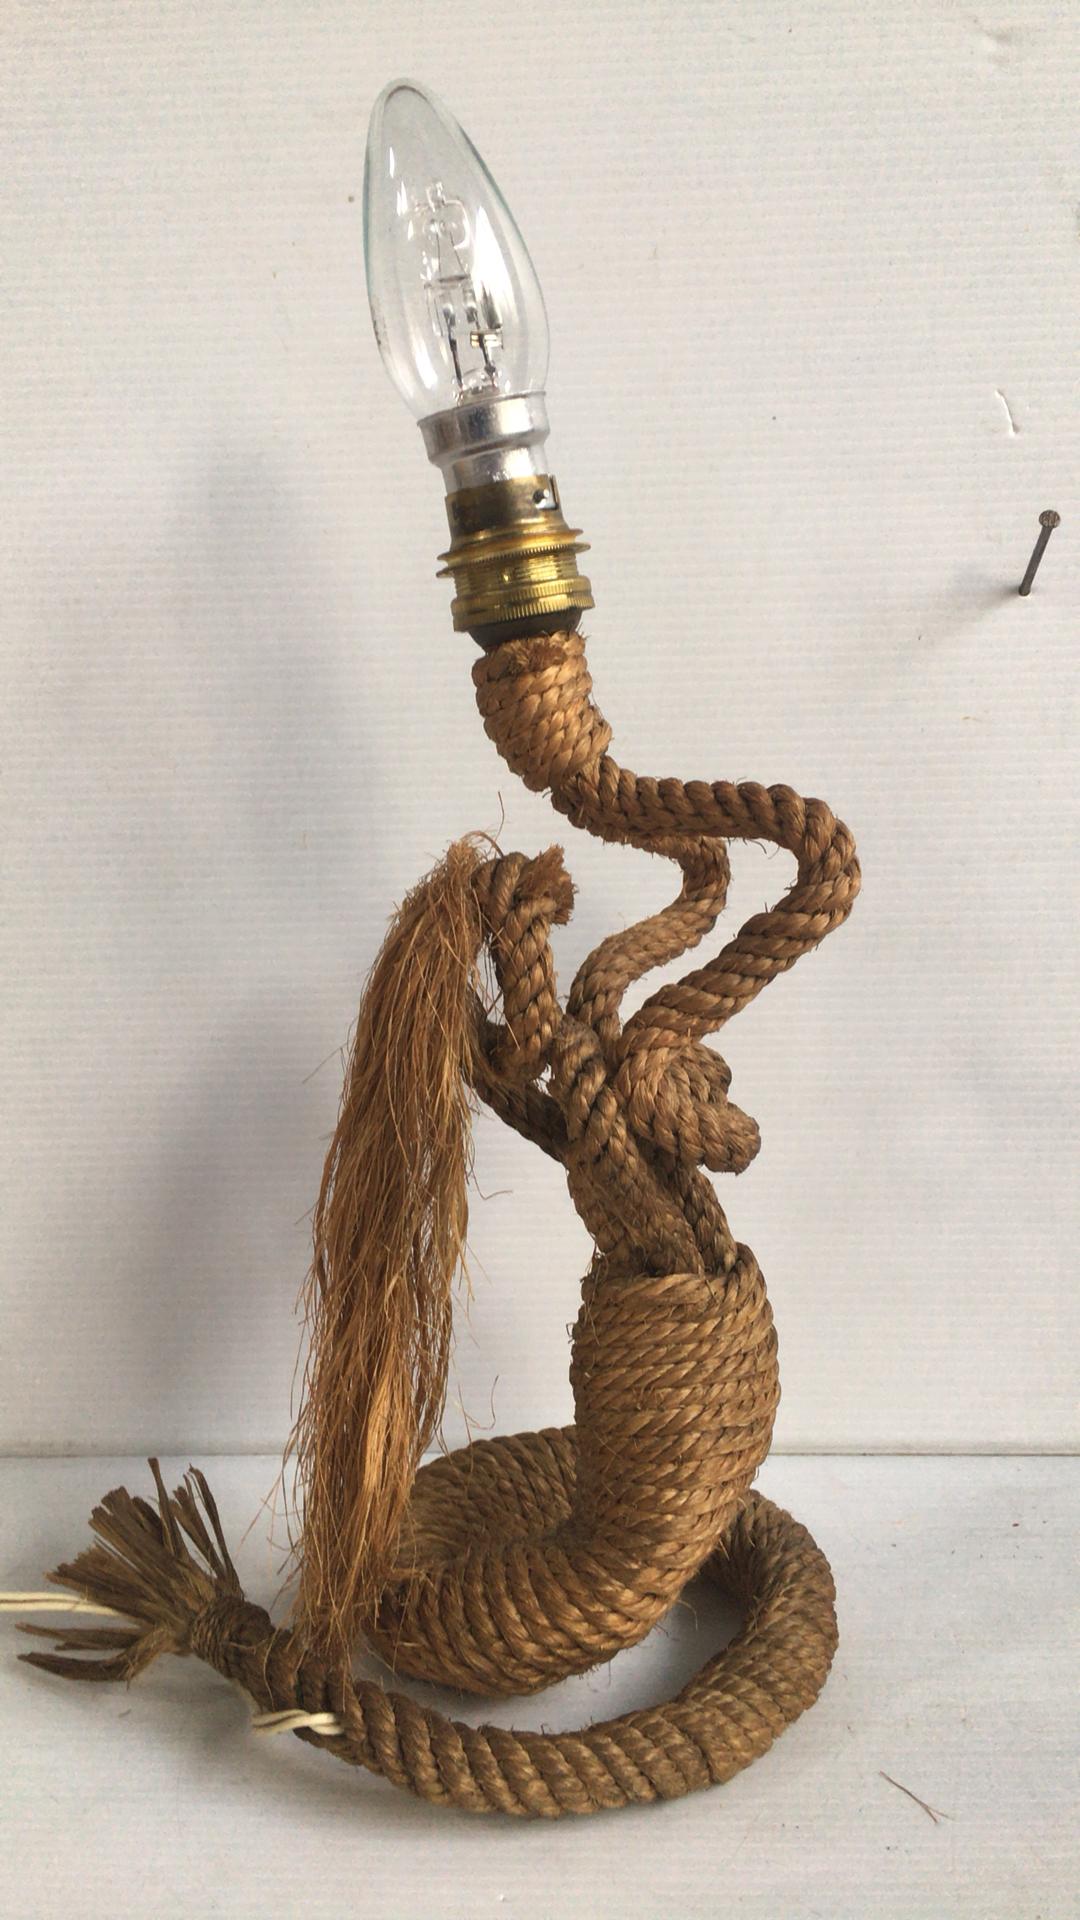 Midcentury mermaid rope lamp by Audoux Minet
Measures: Height / 13.5